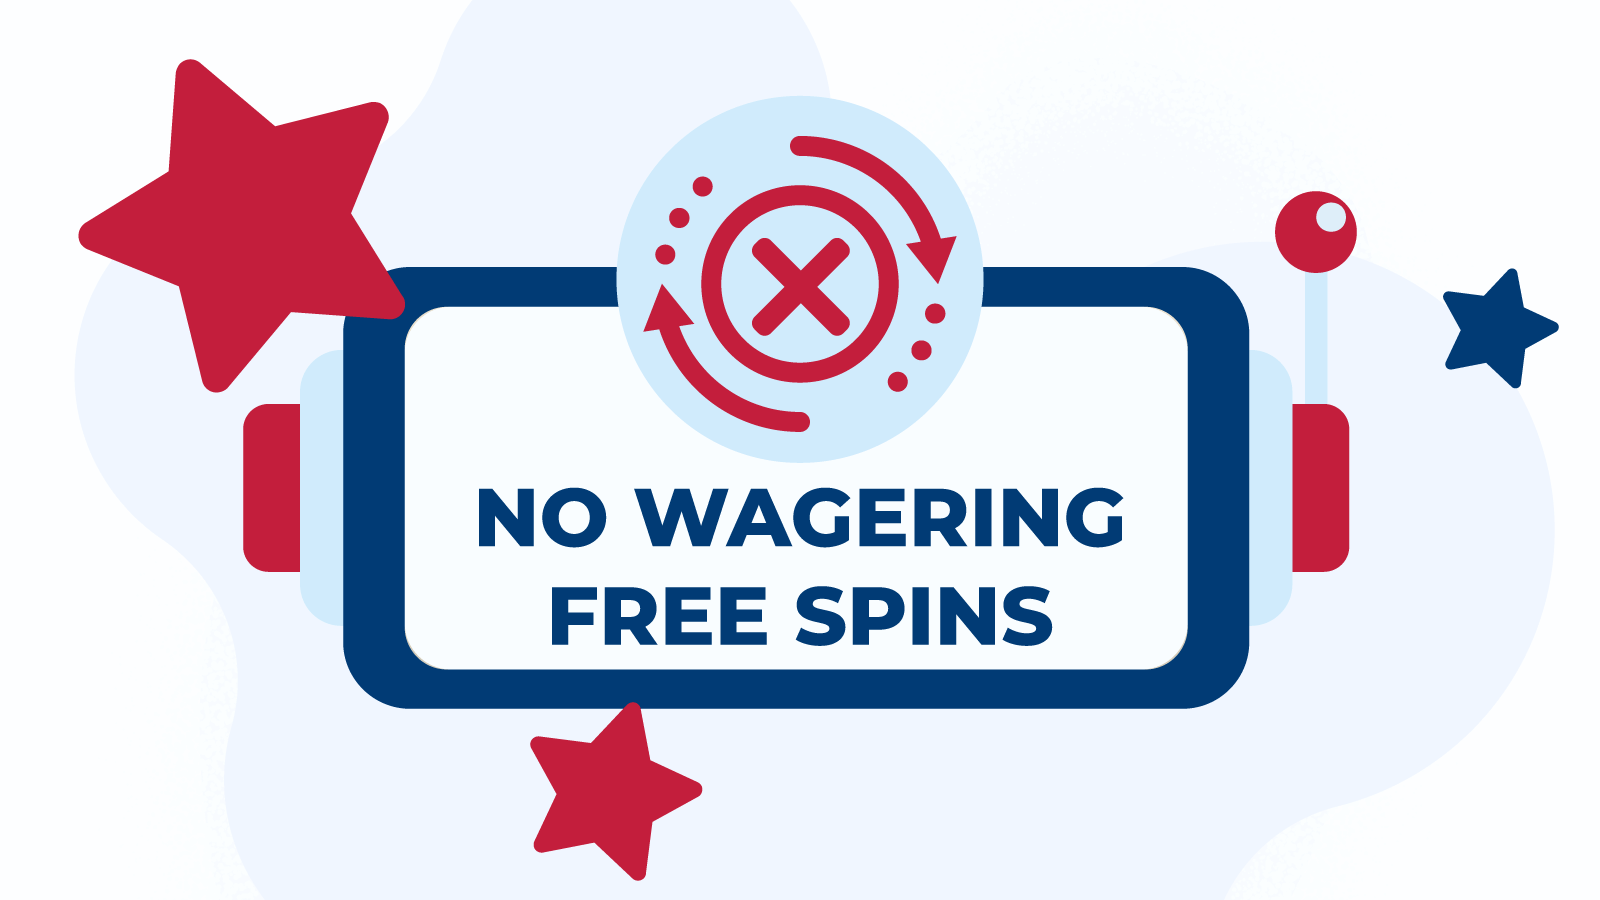 win real money free spins keep winnings